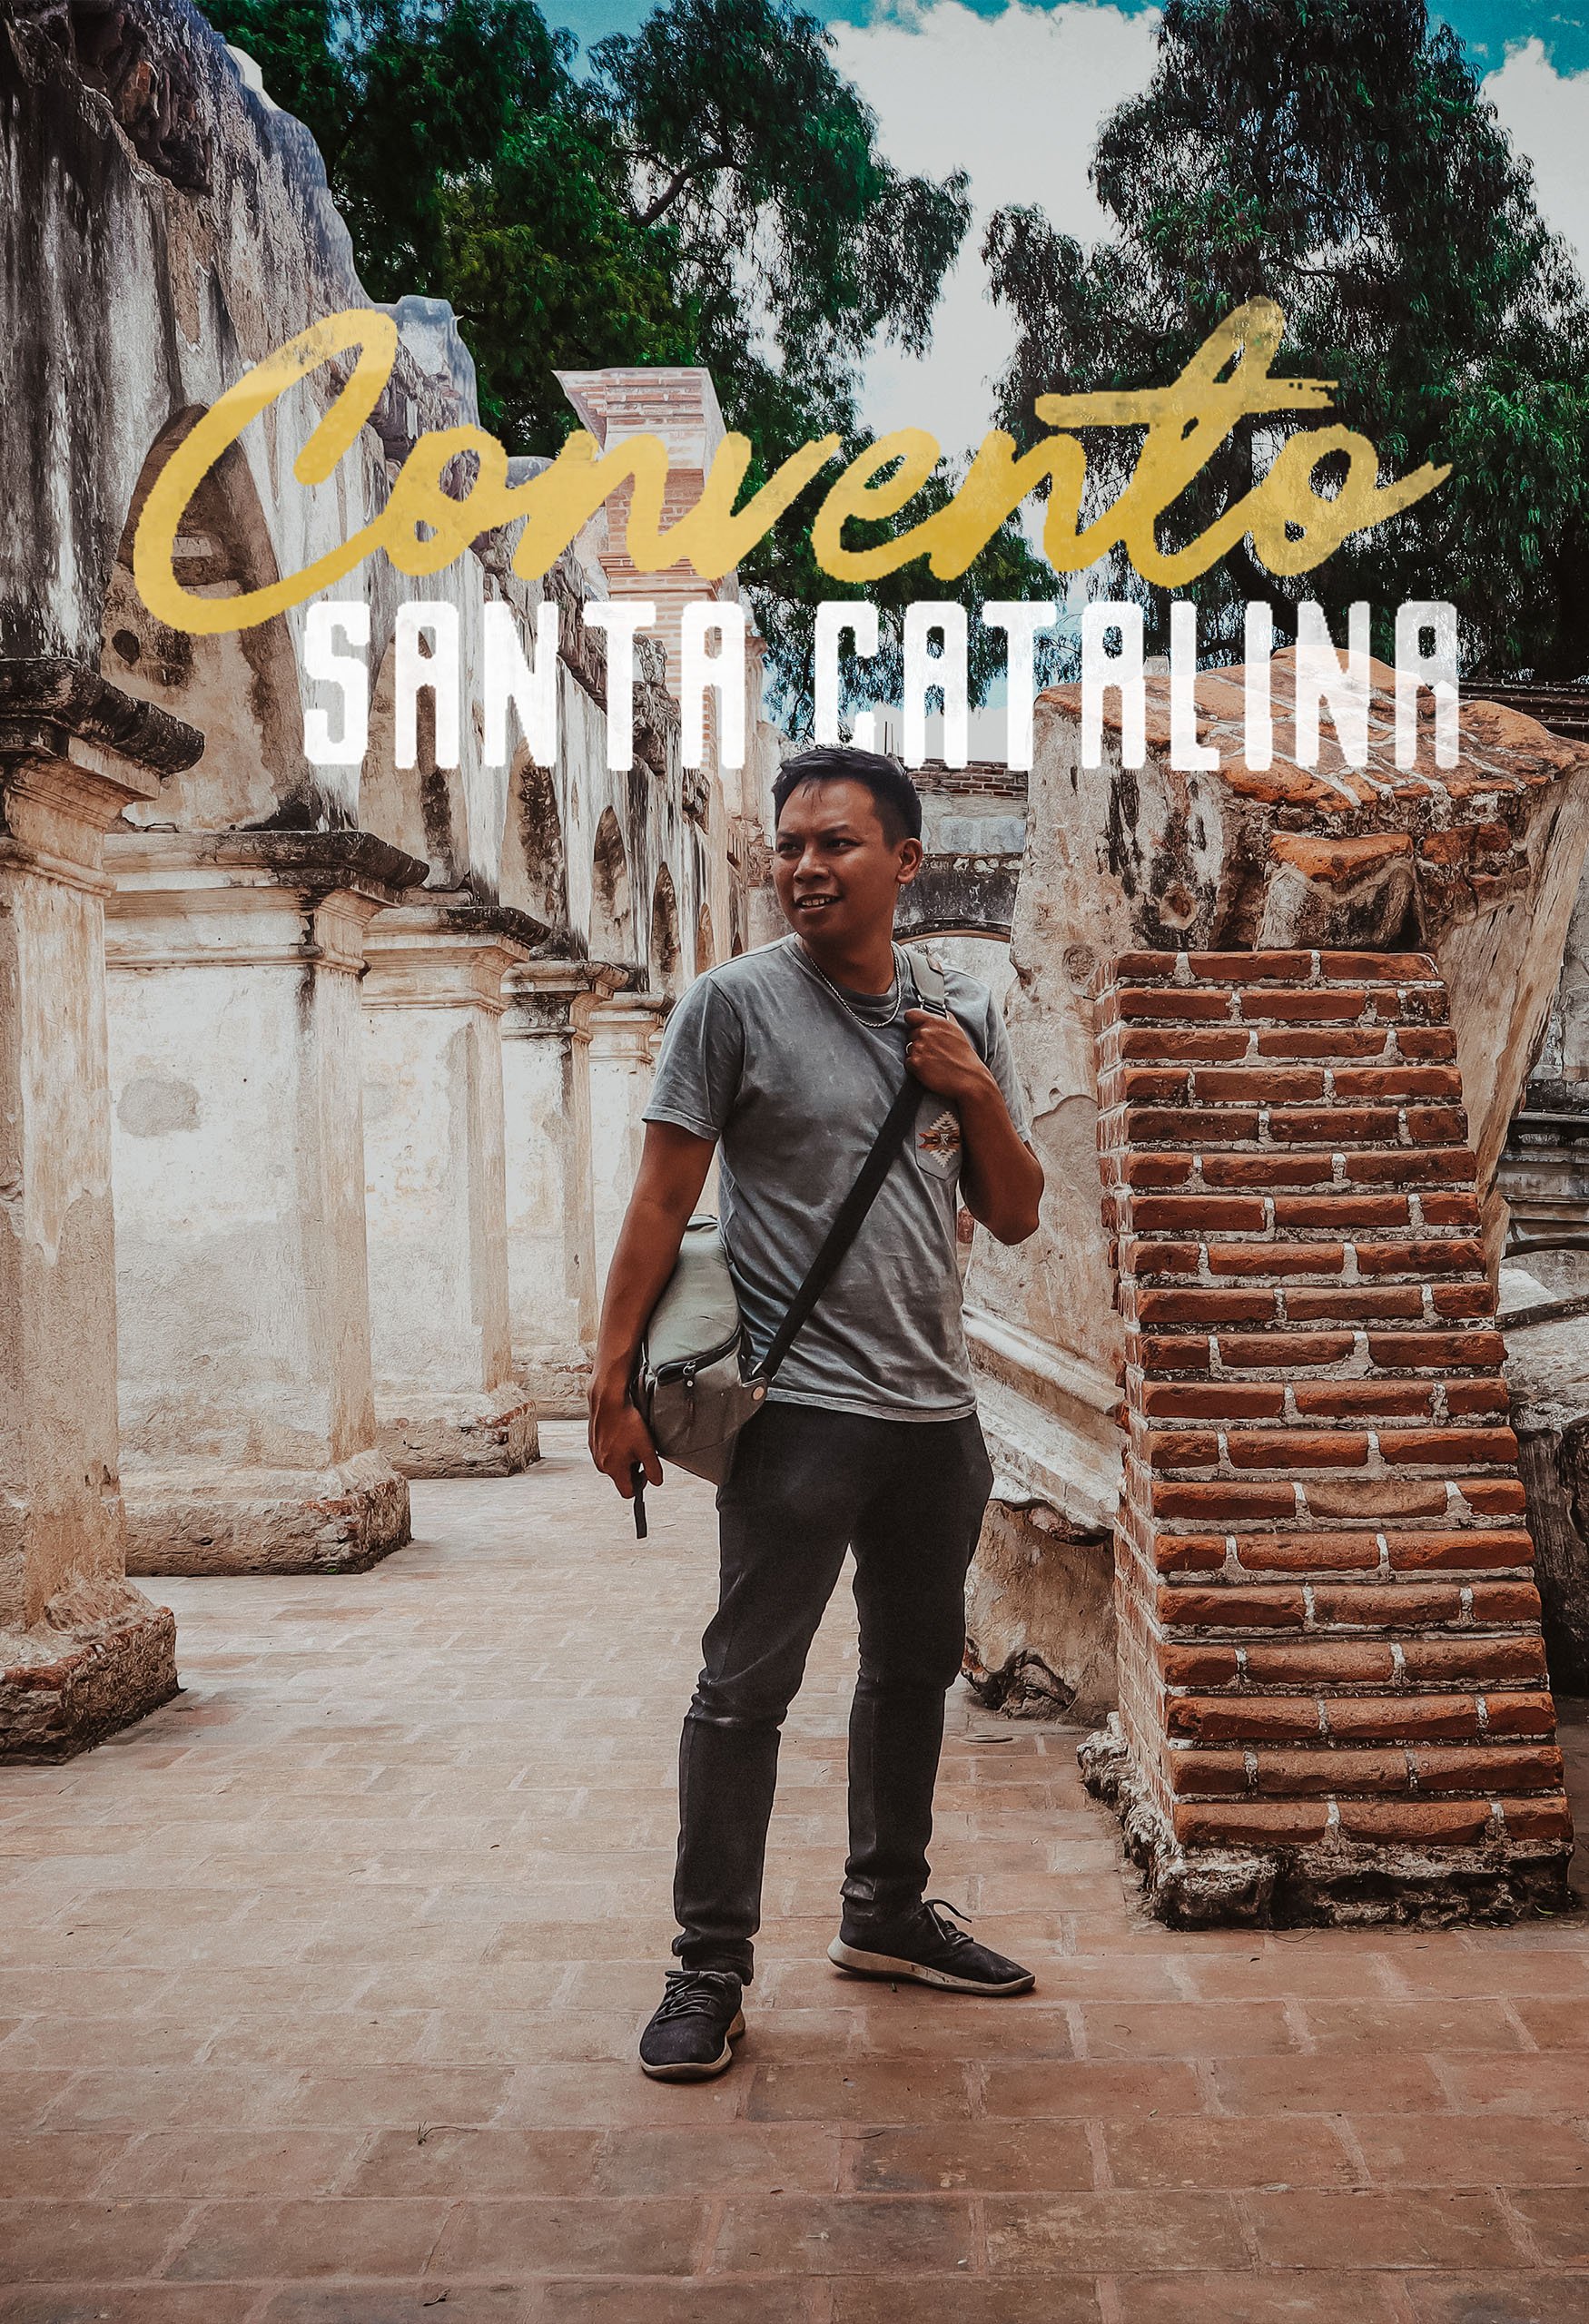 Convento Santa Catalina